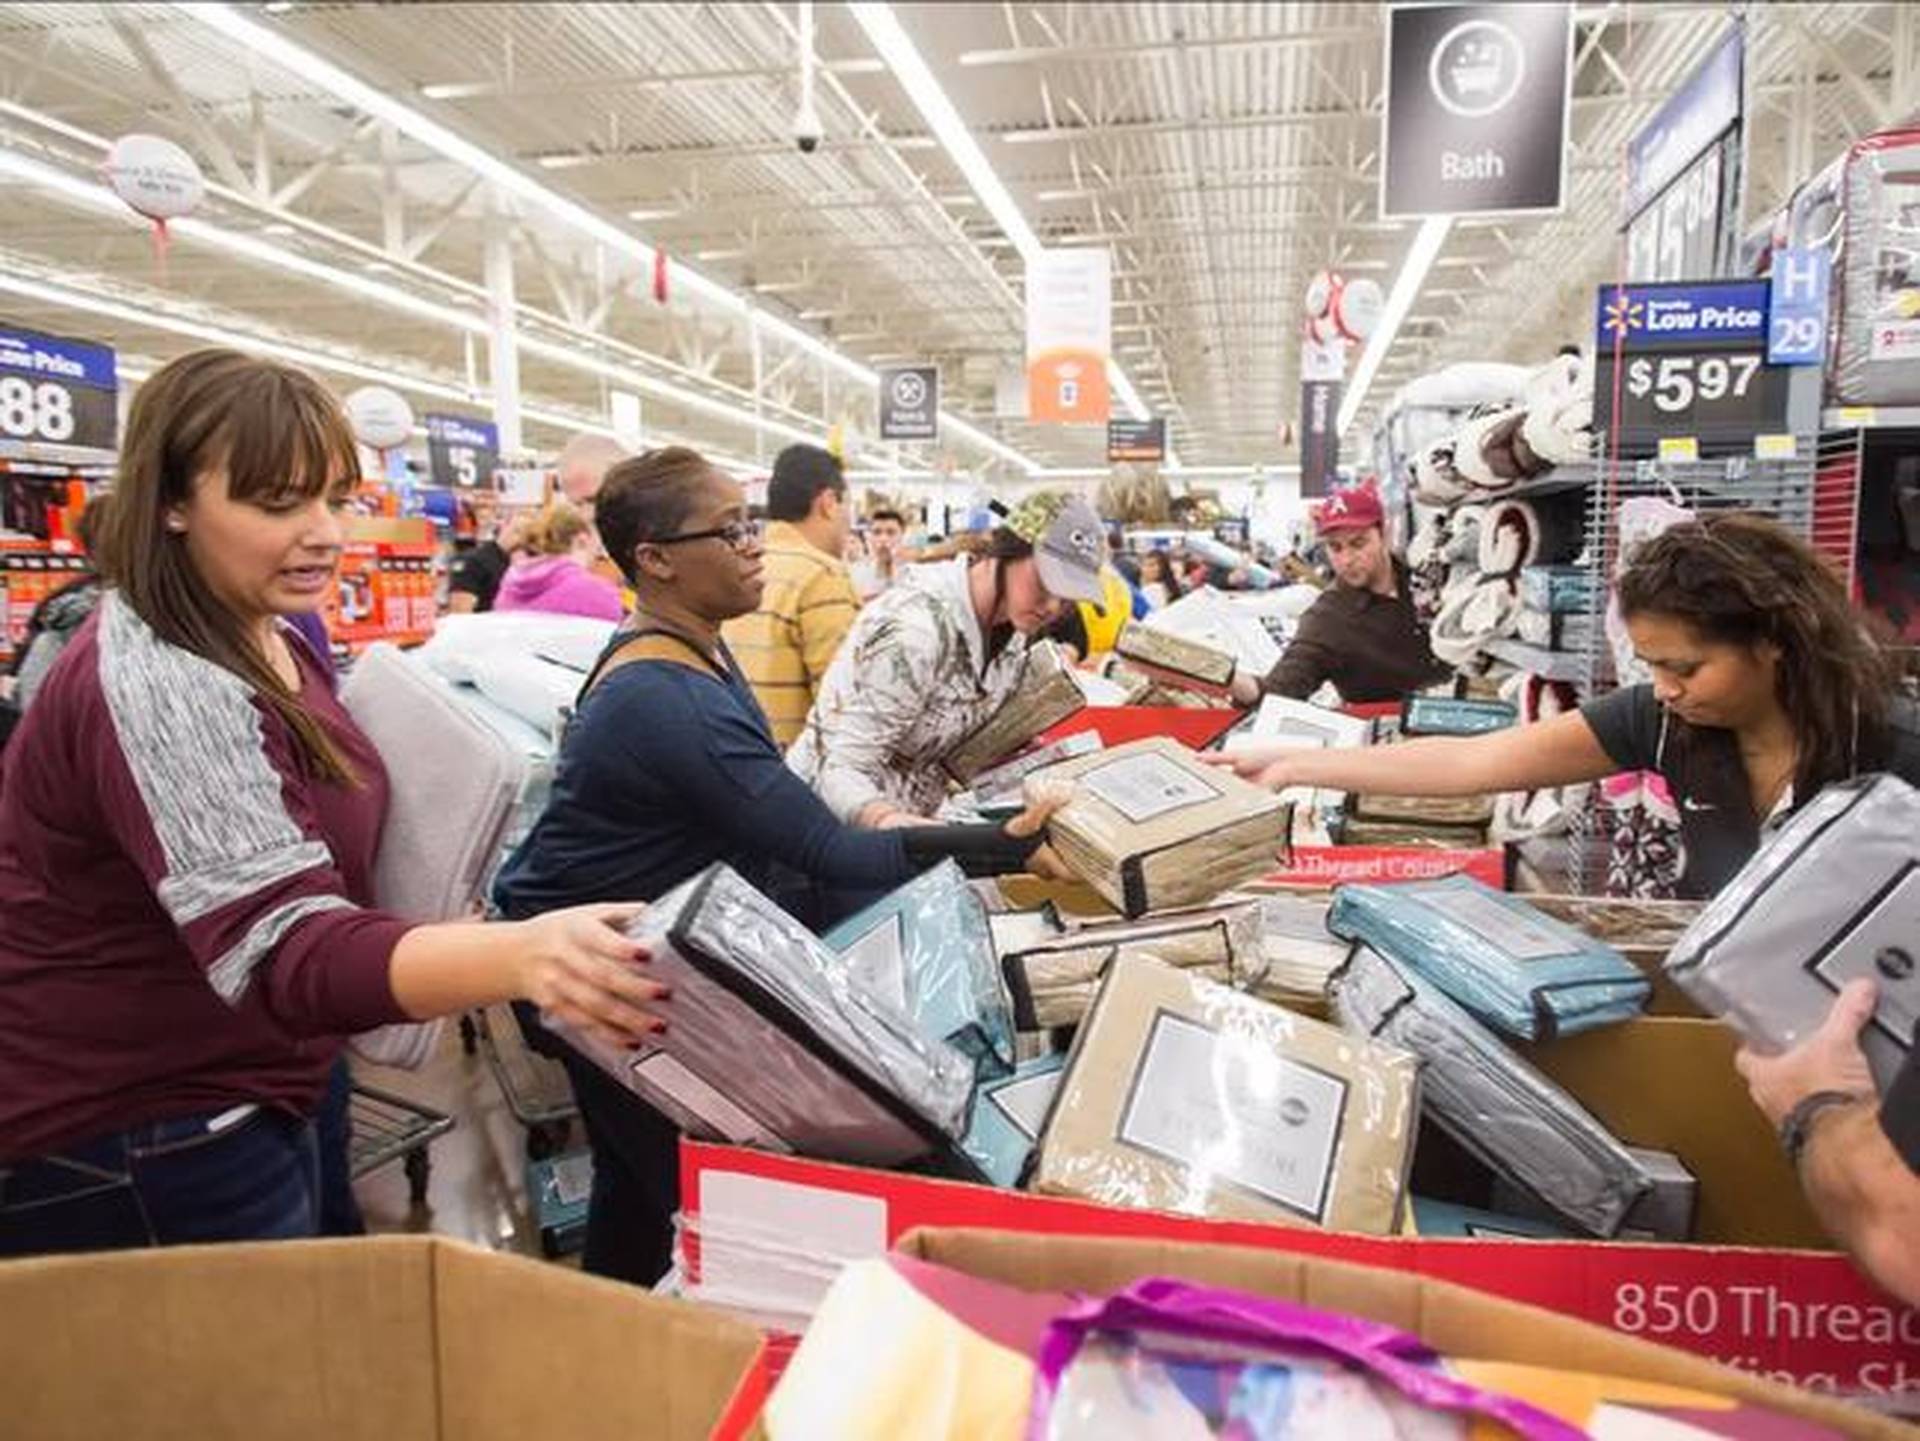 Adobe預測美國節日購物季在線消費將增長10%